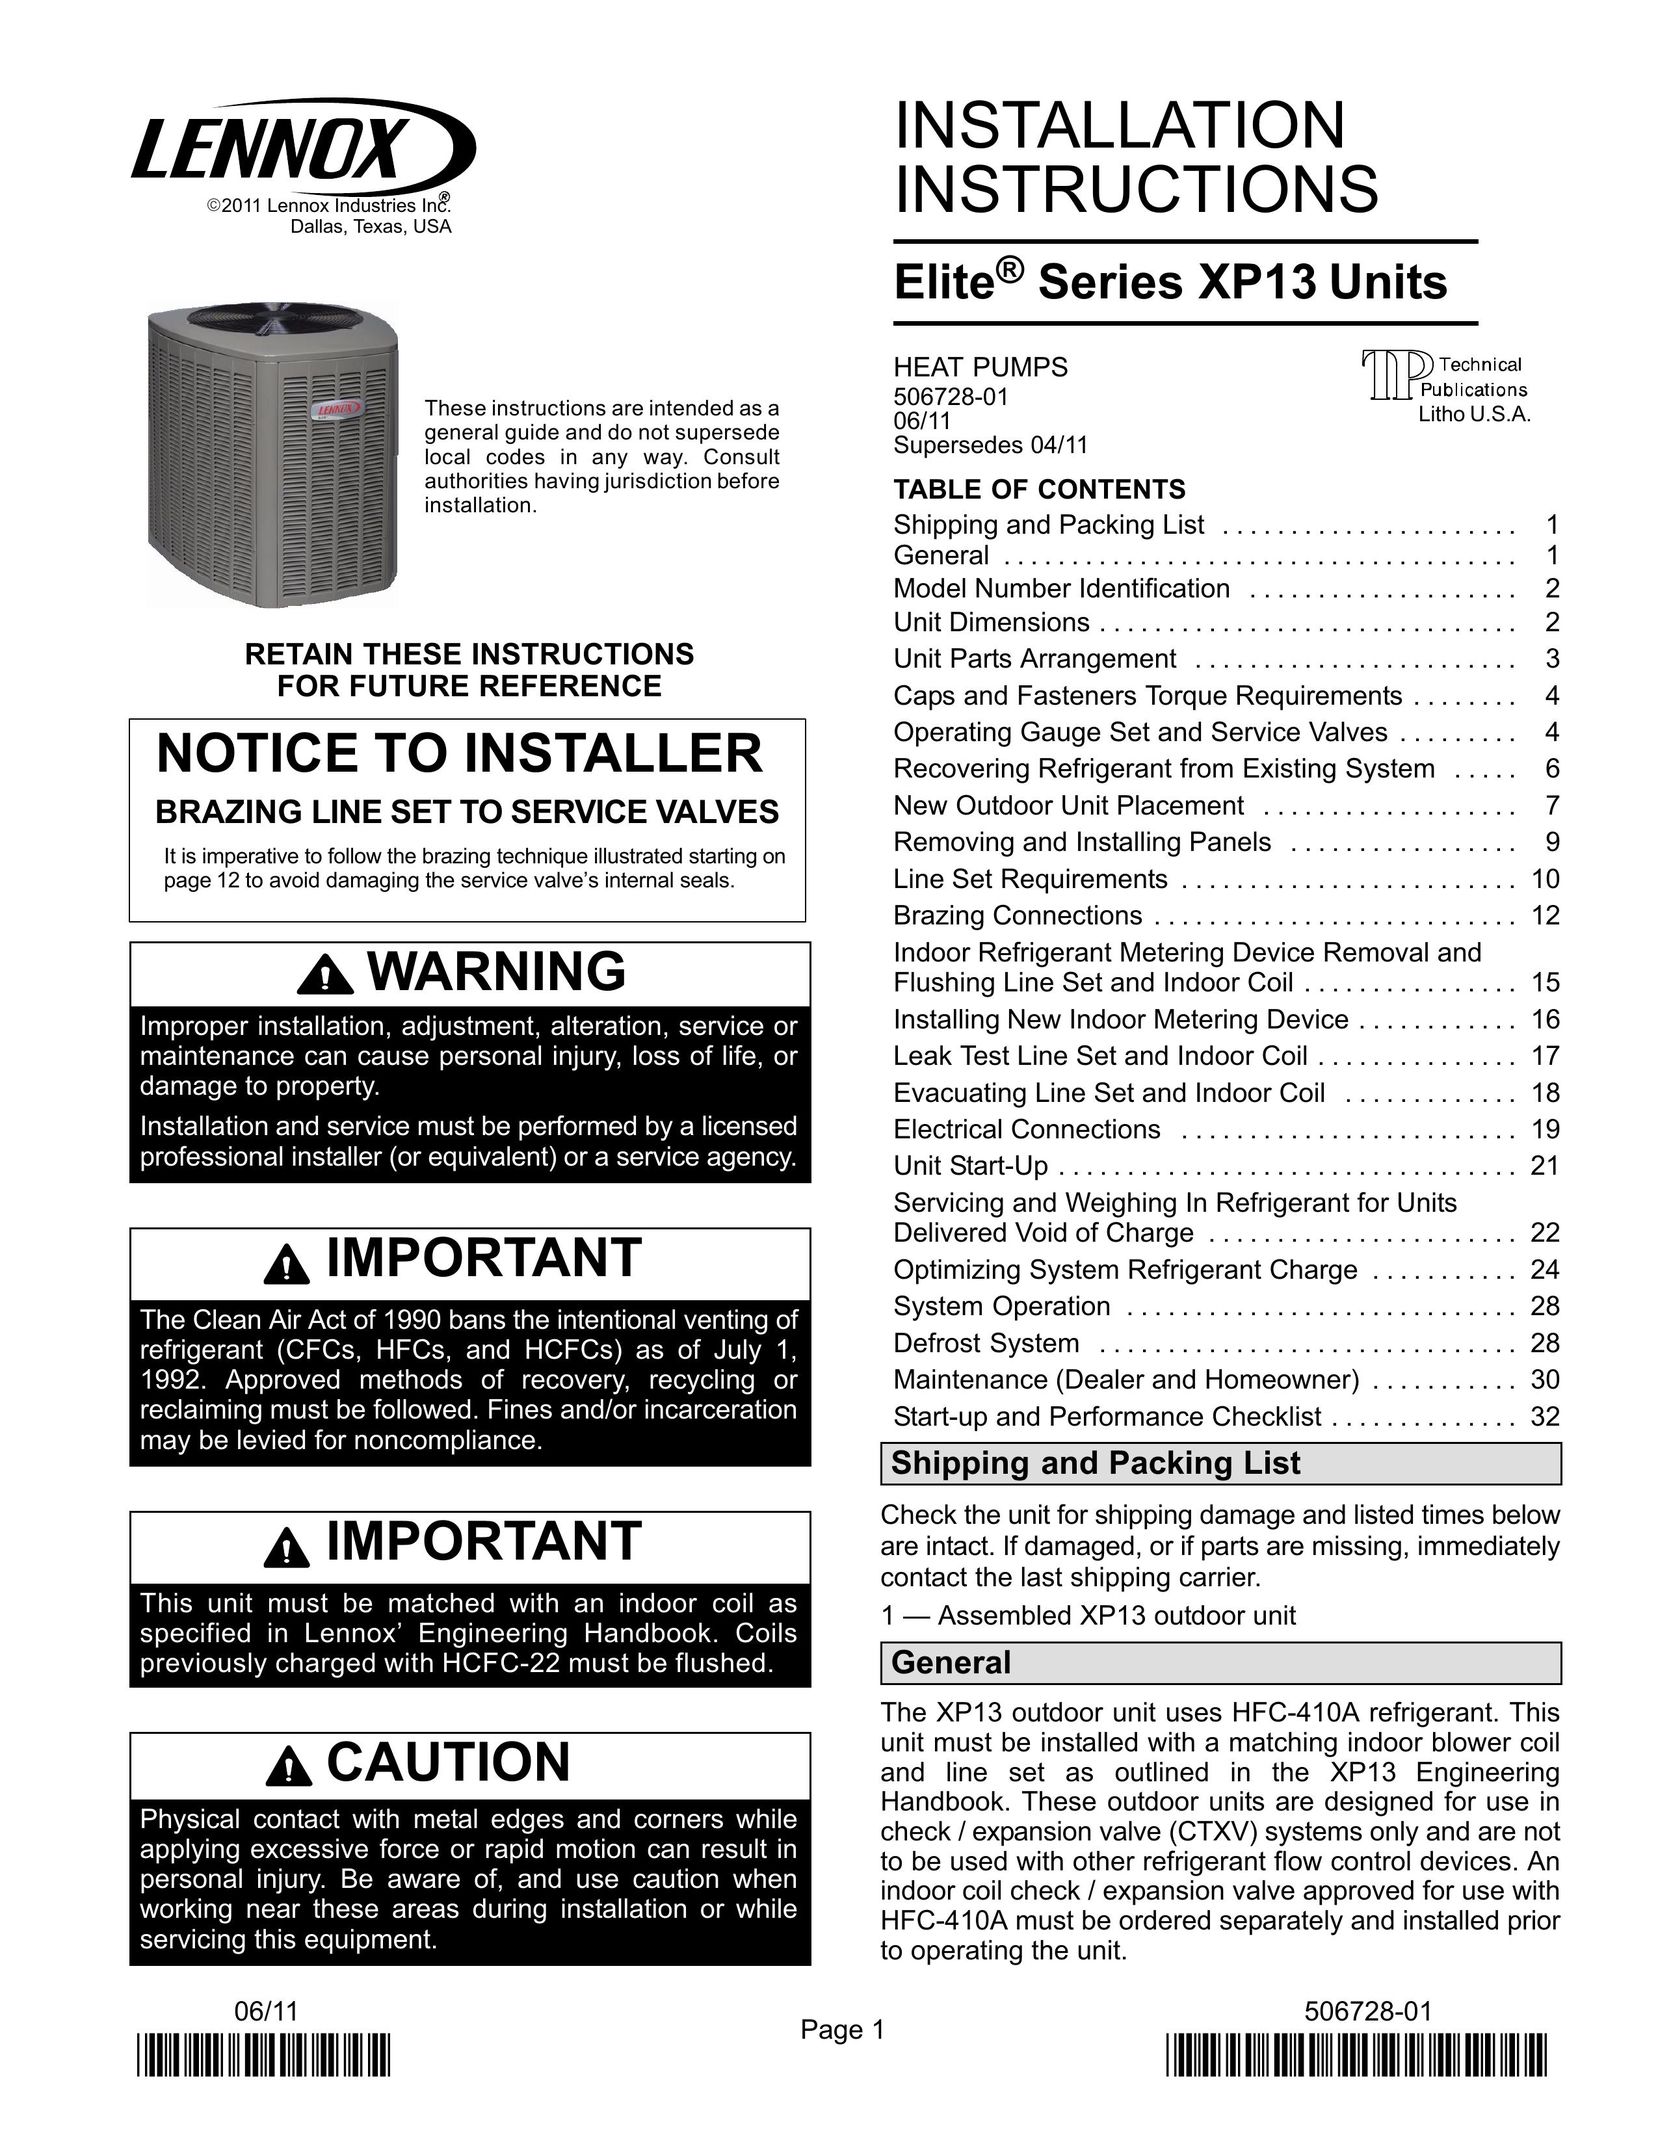 Lennox International Inc. 06/11 50672801 Air Conditioner User Manual